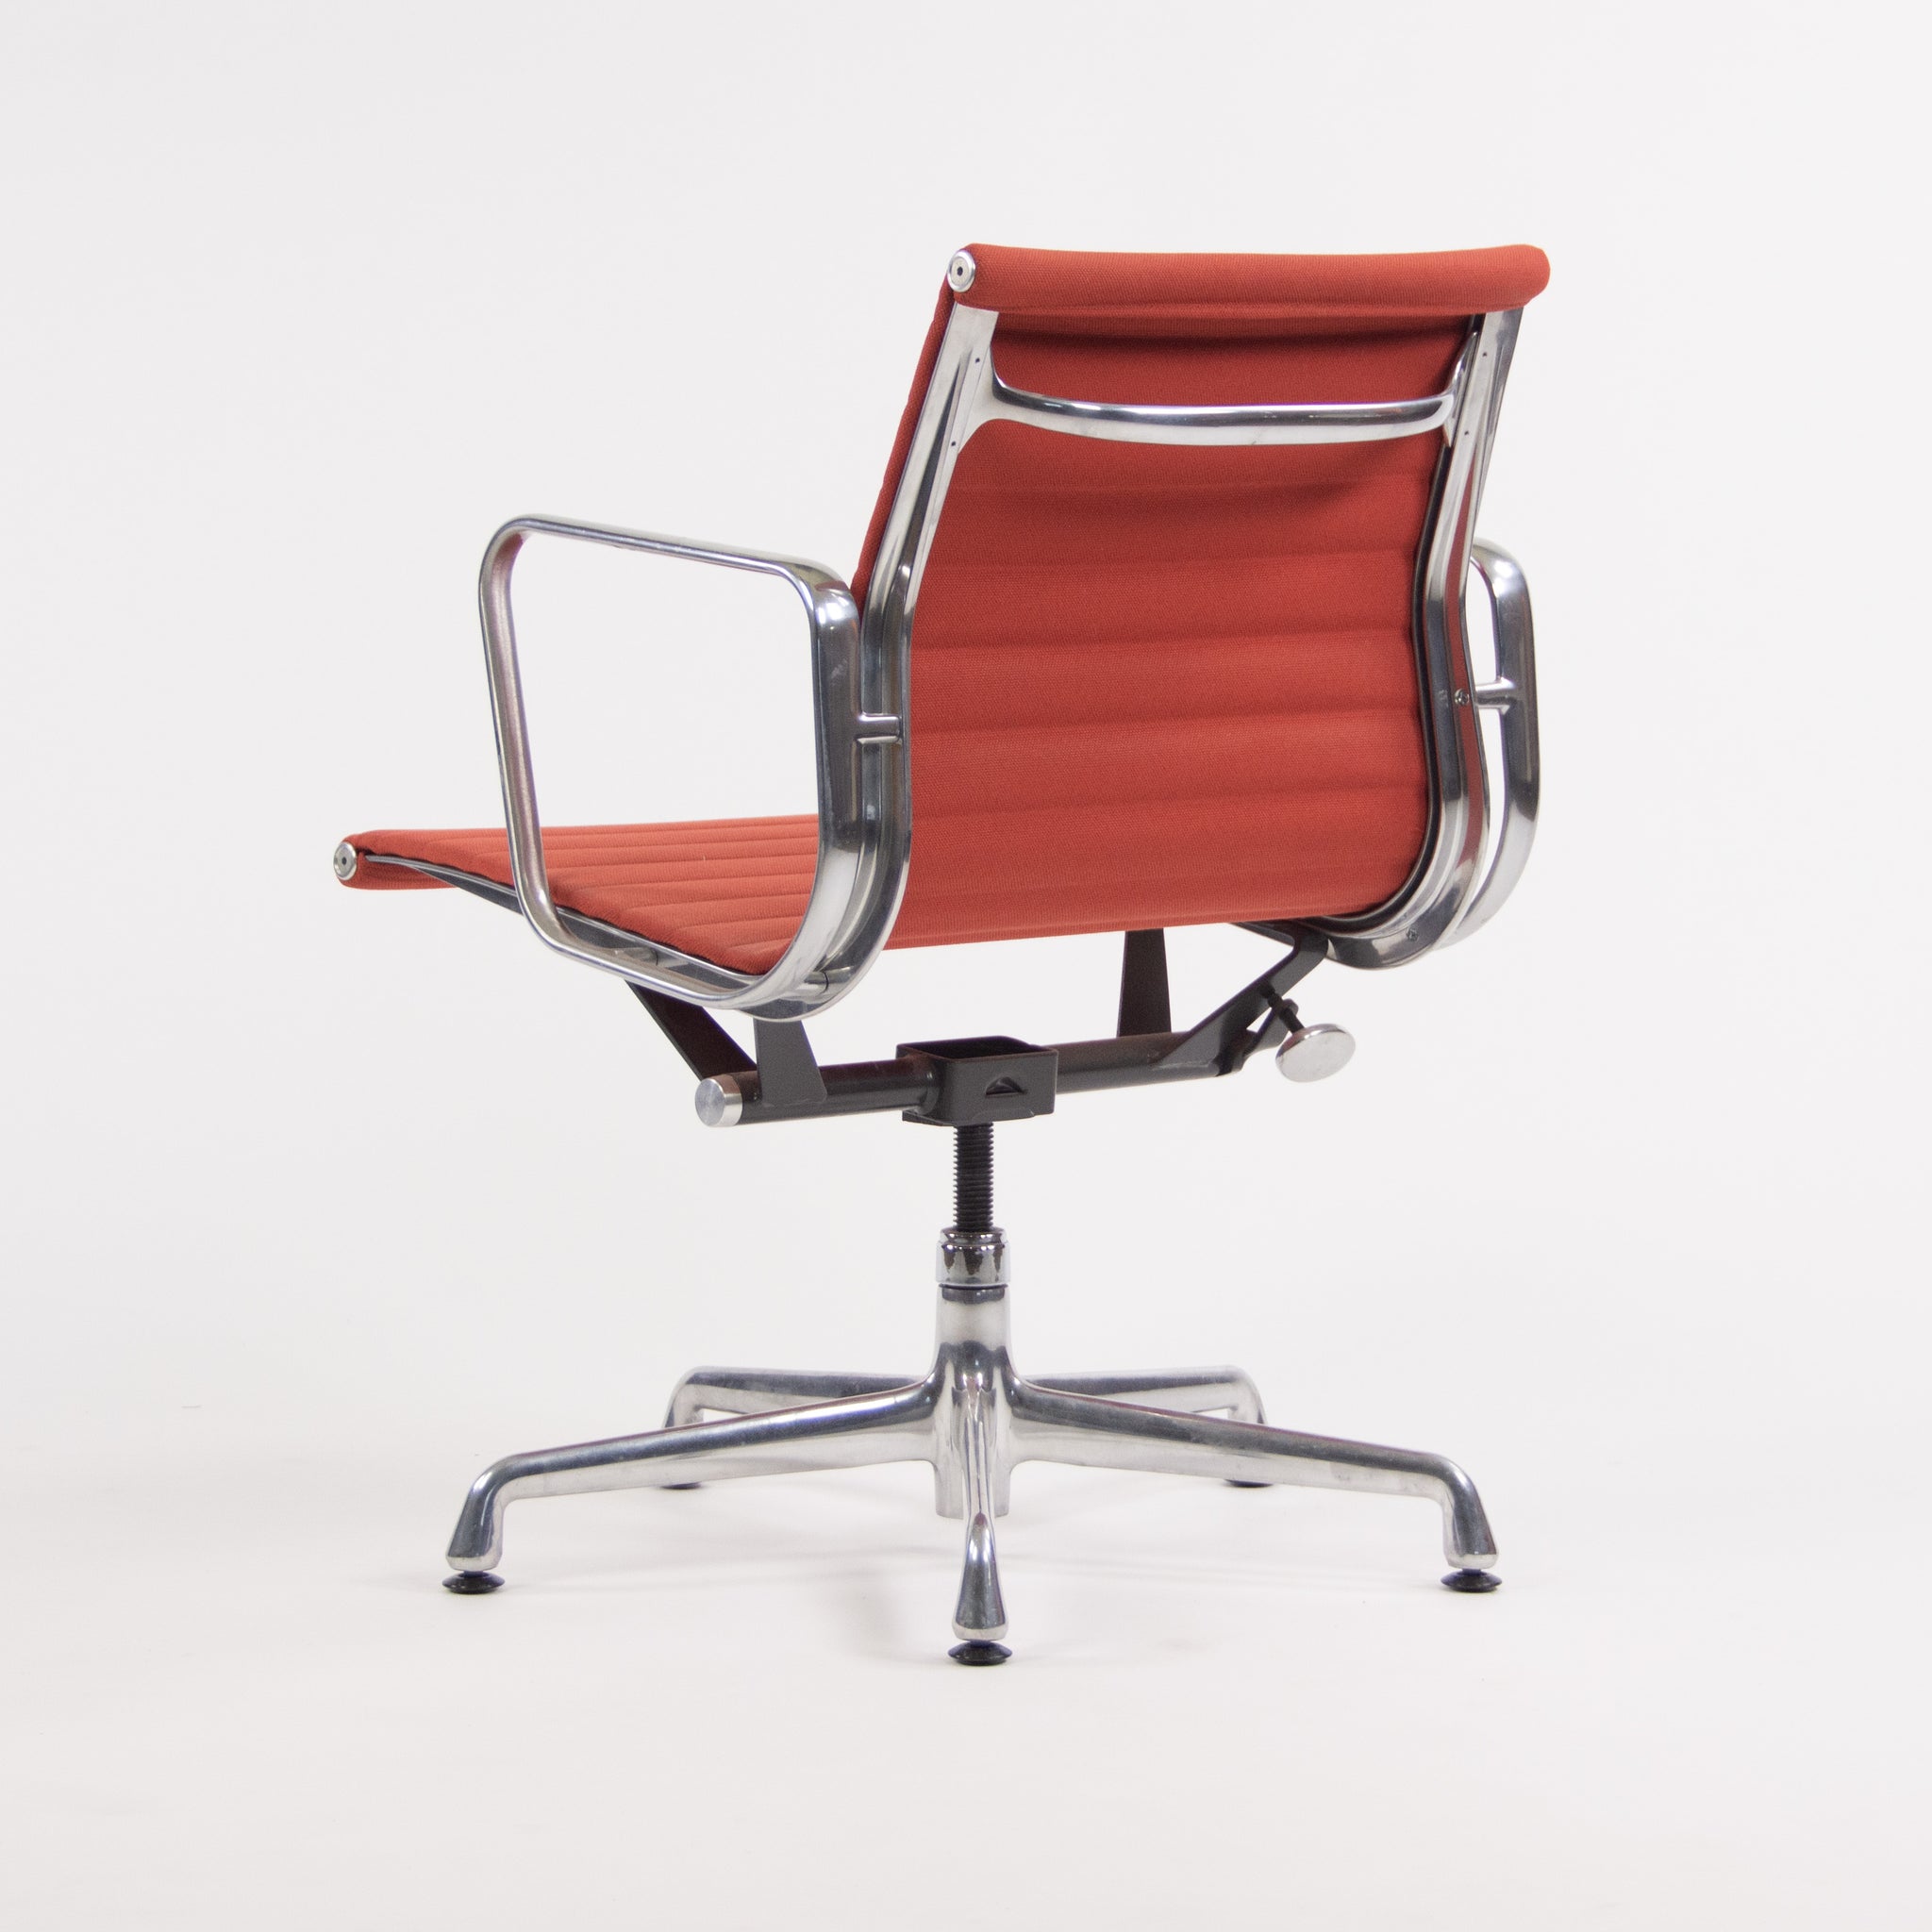 SOLD Herman Miller Eames 2006 Aluminum Group Management Desk Chair Red Orange Fabric